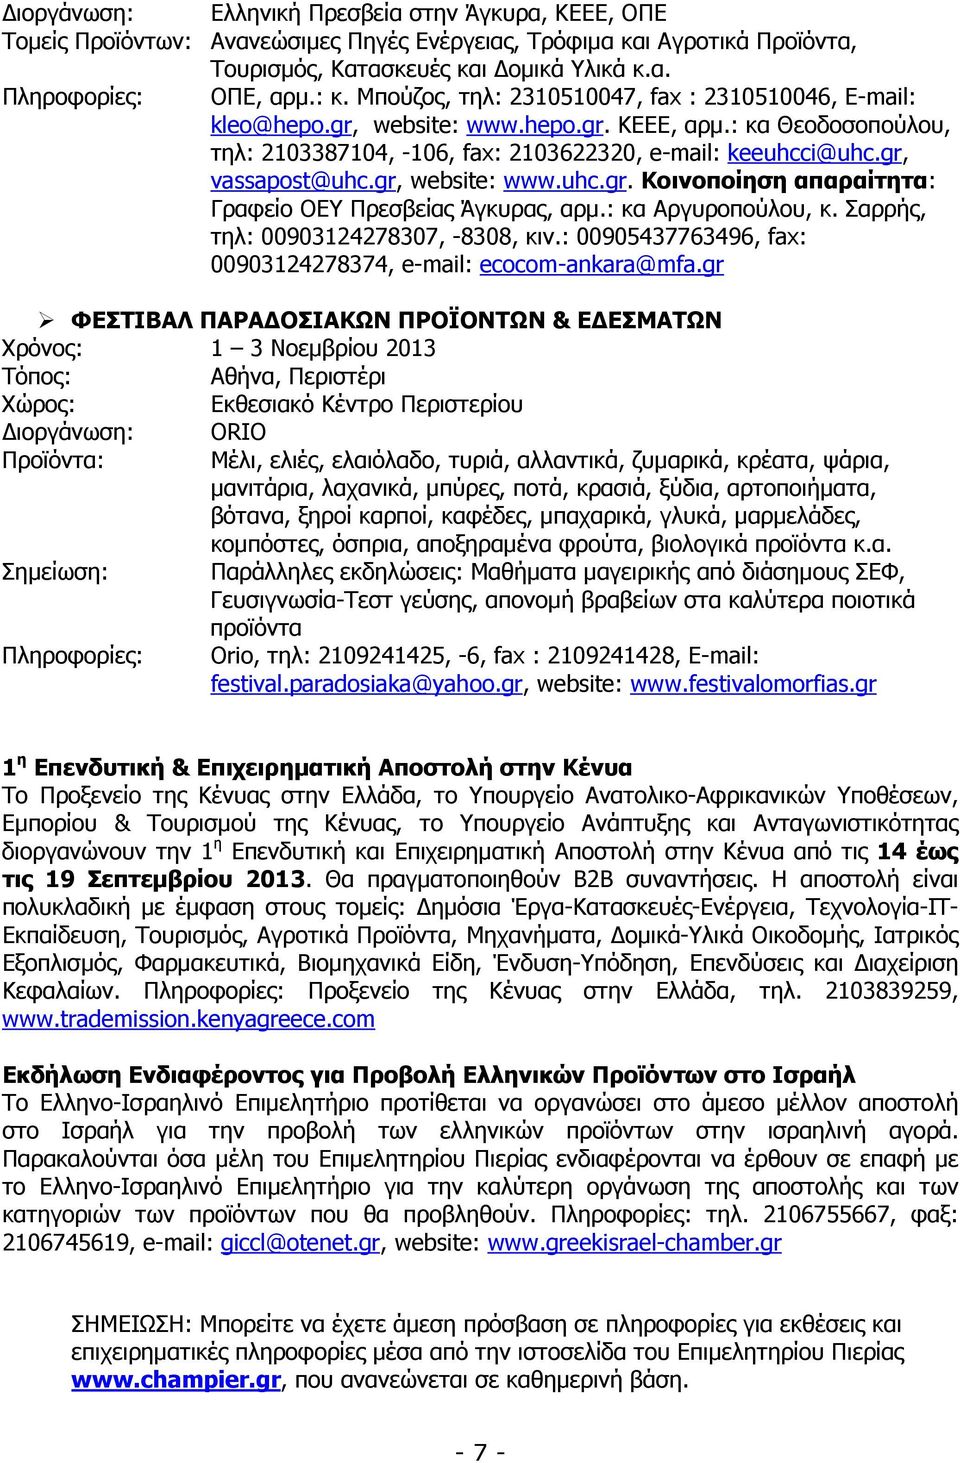 gr, website: www.uhc.gr. Κοινοποίηση απαραίτητα: Γραφείο ΟΕΥ Πρεσβείας Άγκυρας, αρµ.: κα Αργυροπούλου, κ. Σαρρής, τηλ: 00903124278307, -8308, κιν.